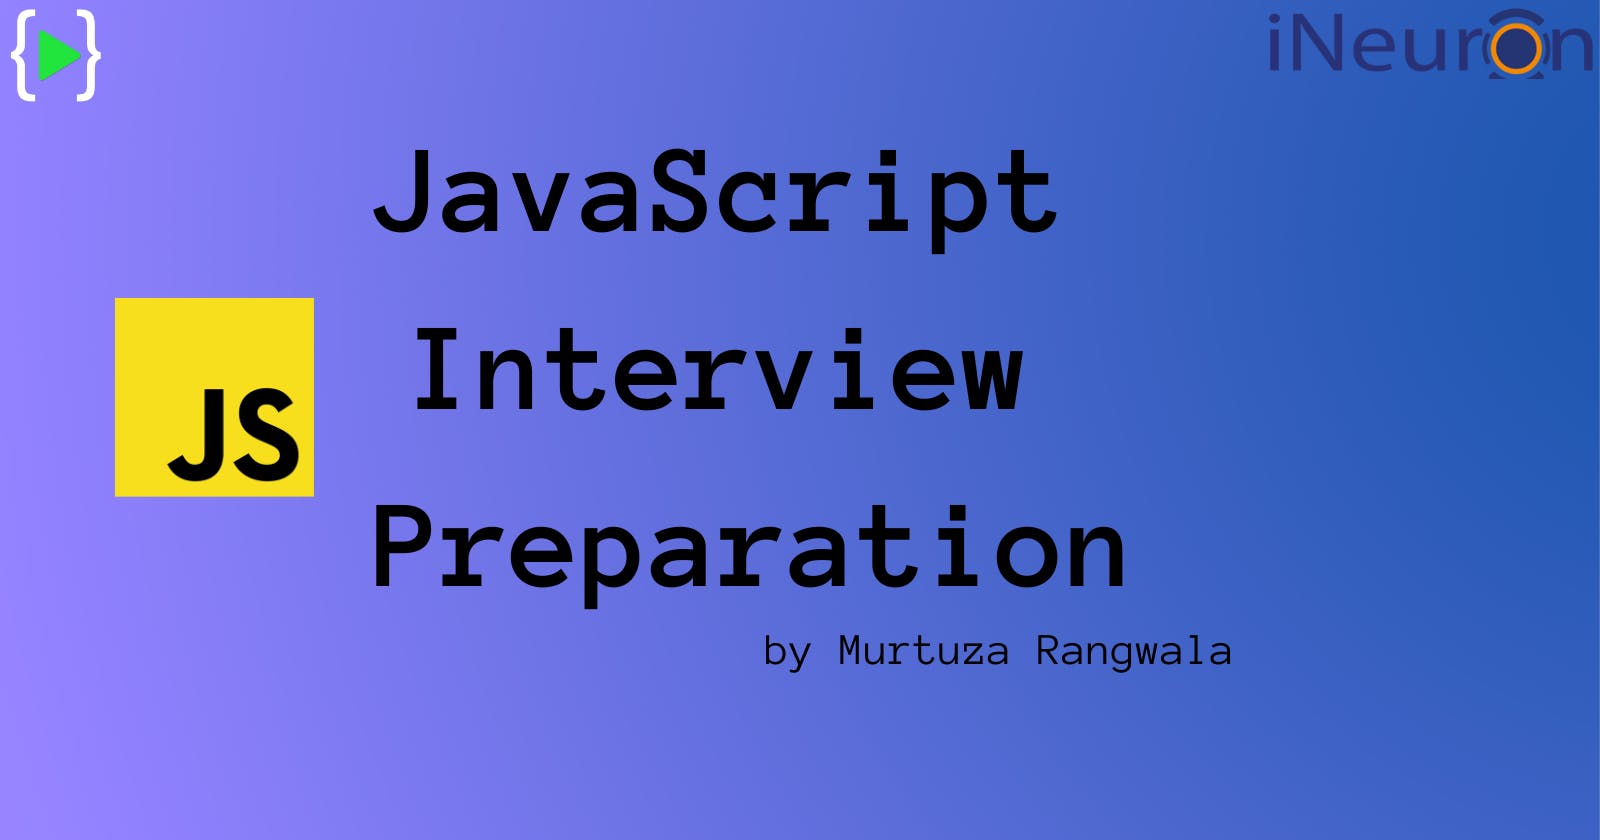 JavaScript Interview Preparation